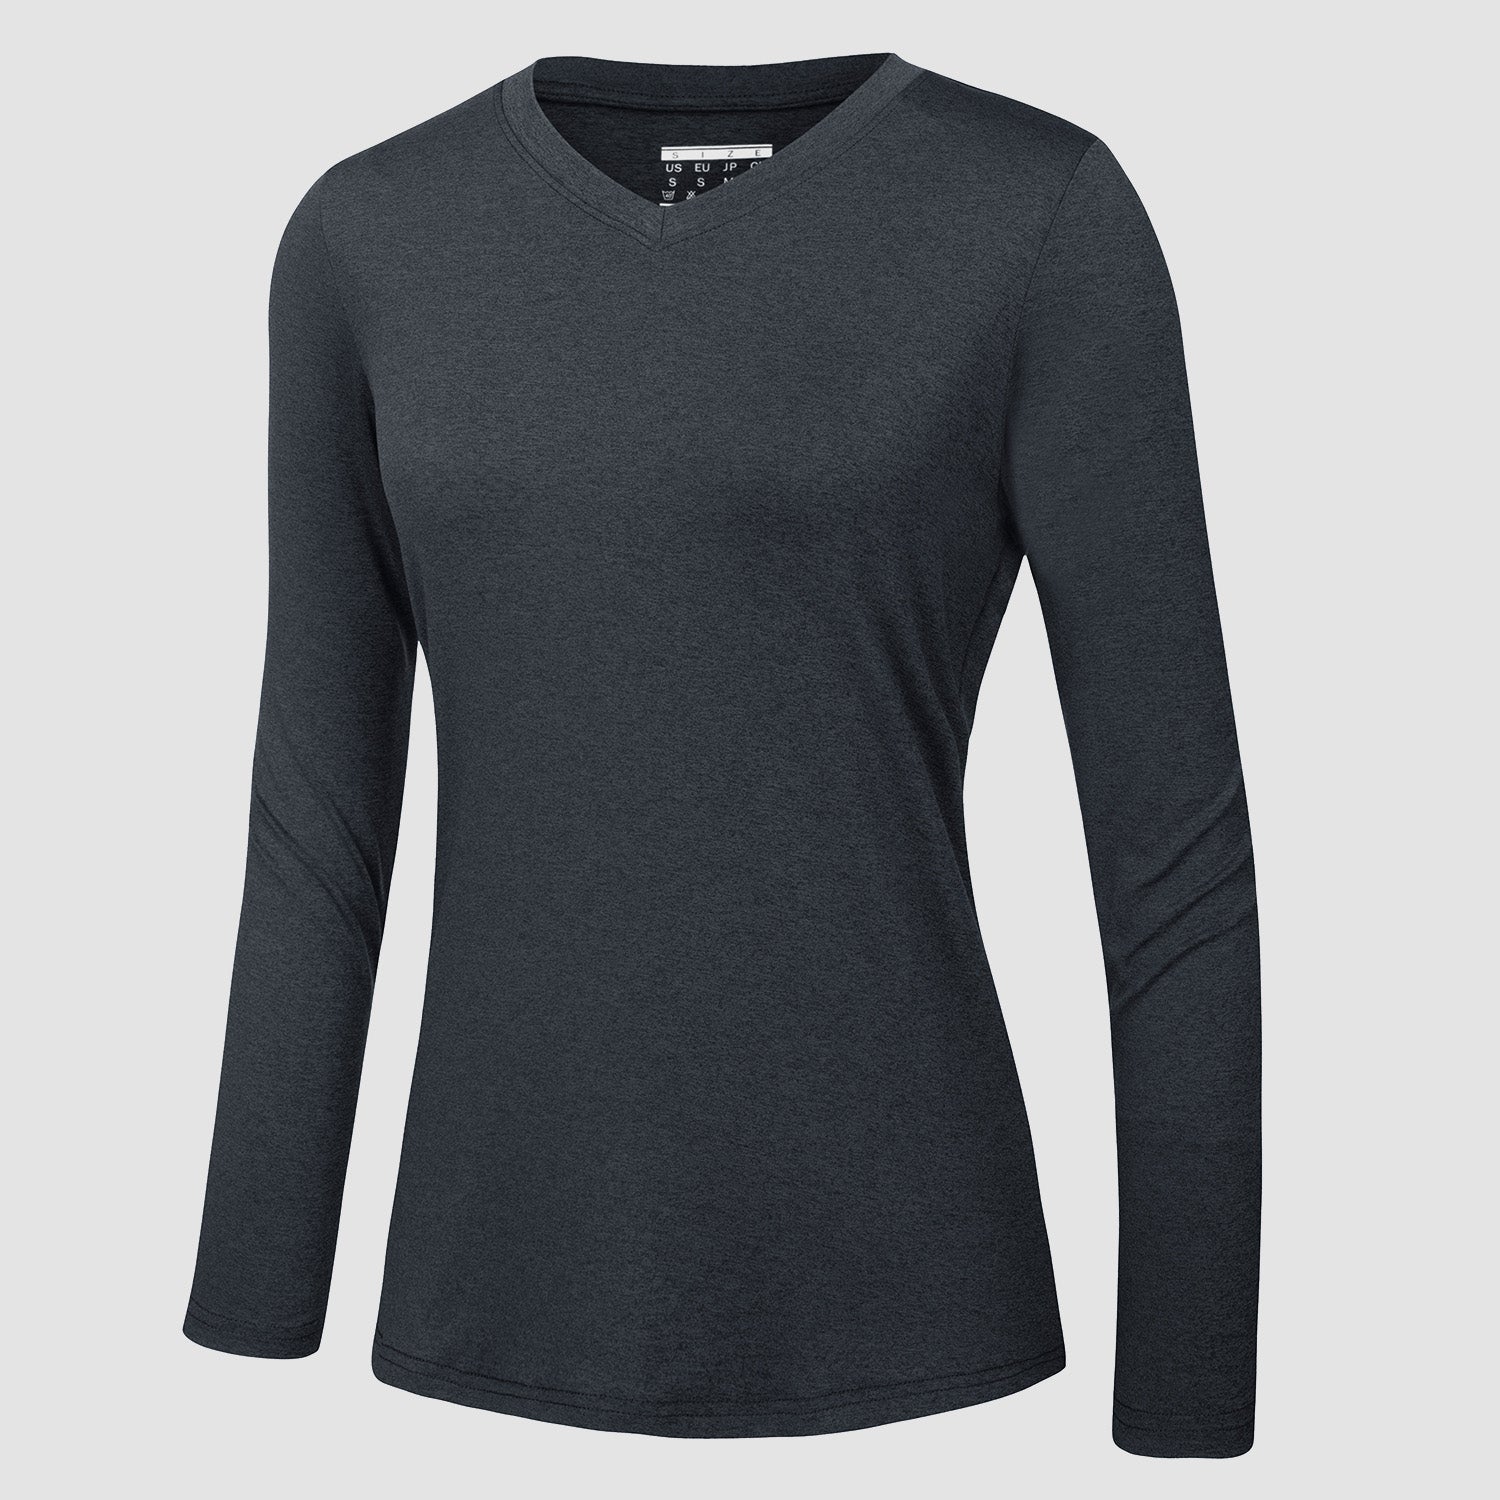 Women's Long Sleeve Shirt V Neck SPF Shirts UPF 50+ Quick Dry Workout Hiking Tee Shirts Rashguard, Light Grey / XL